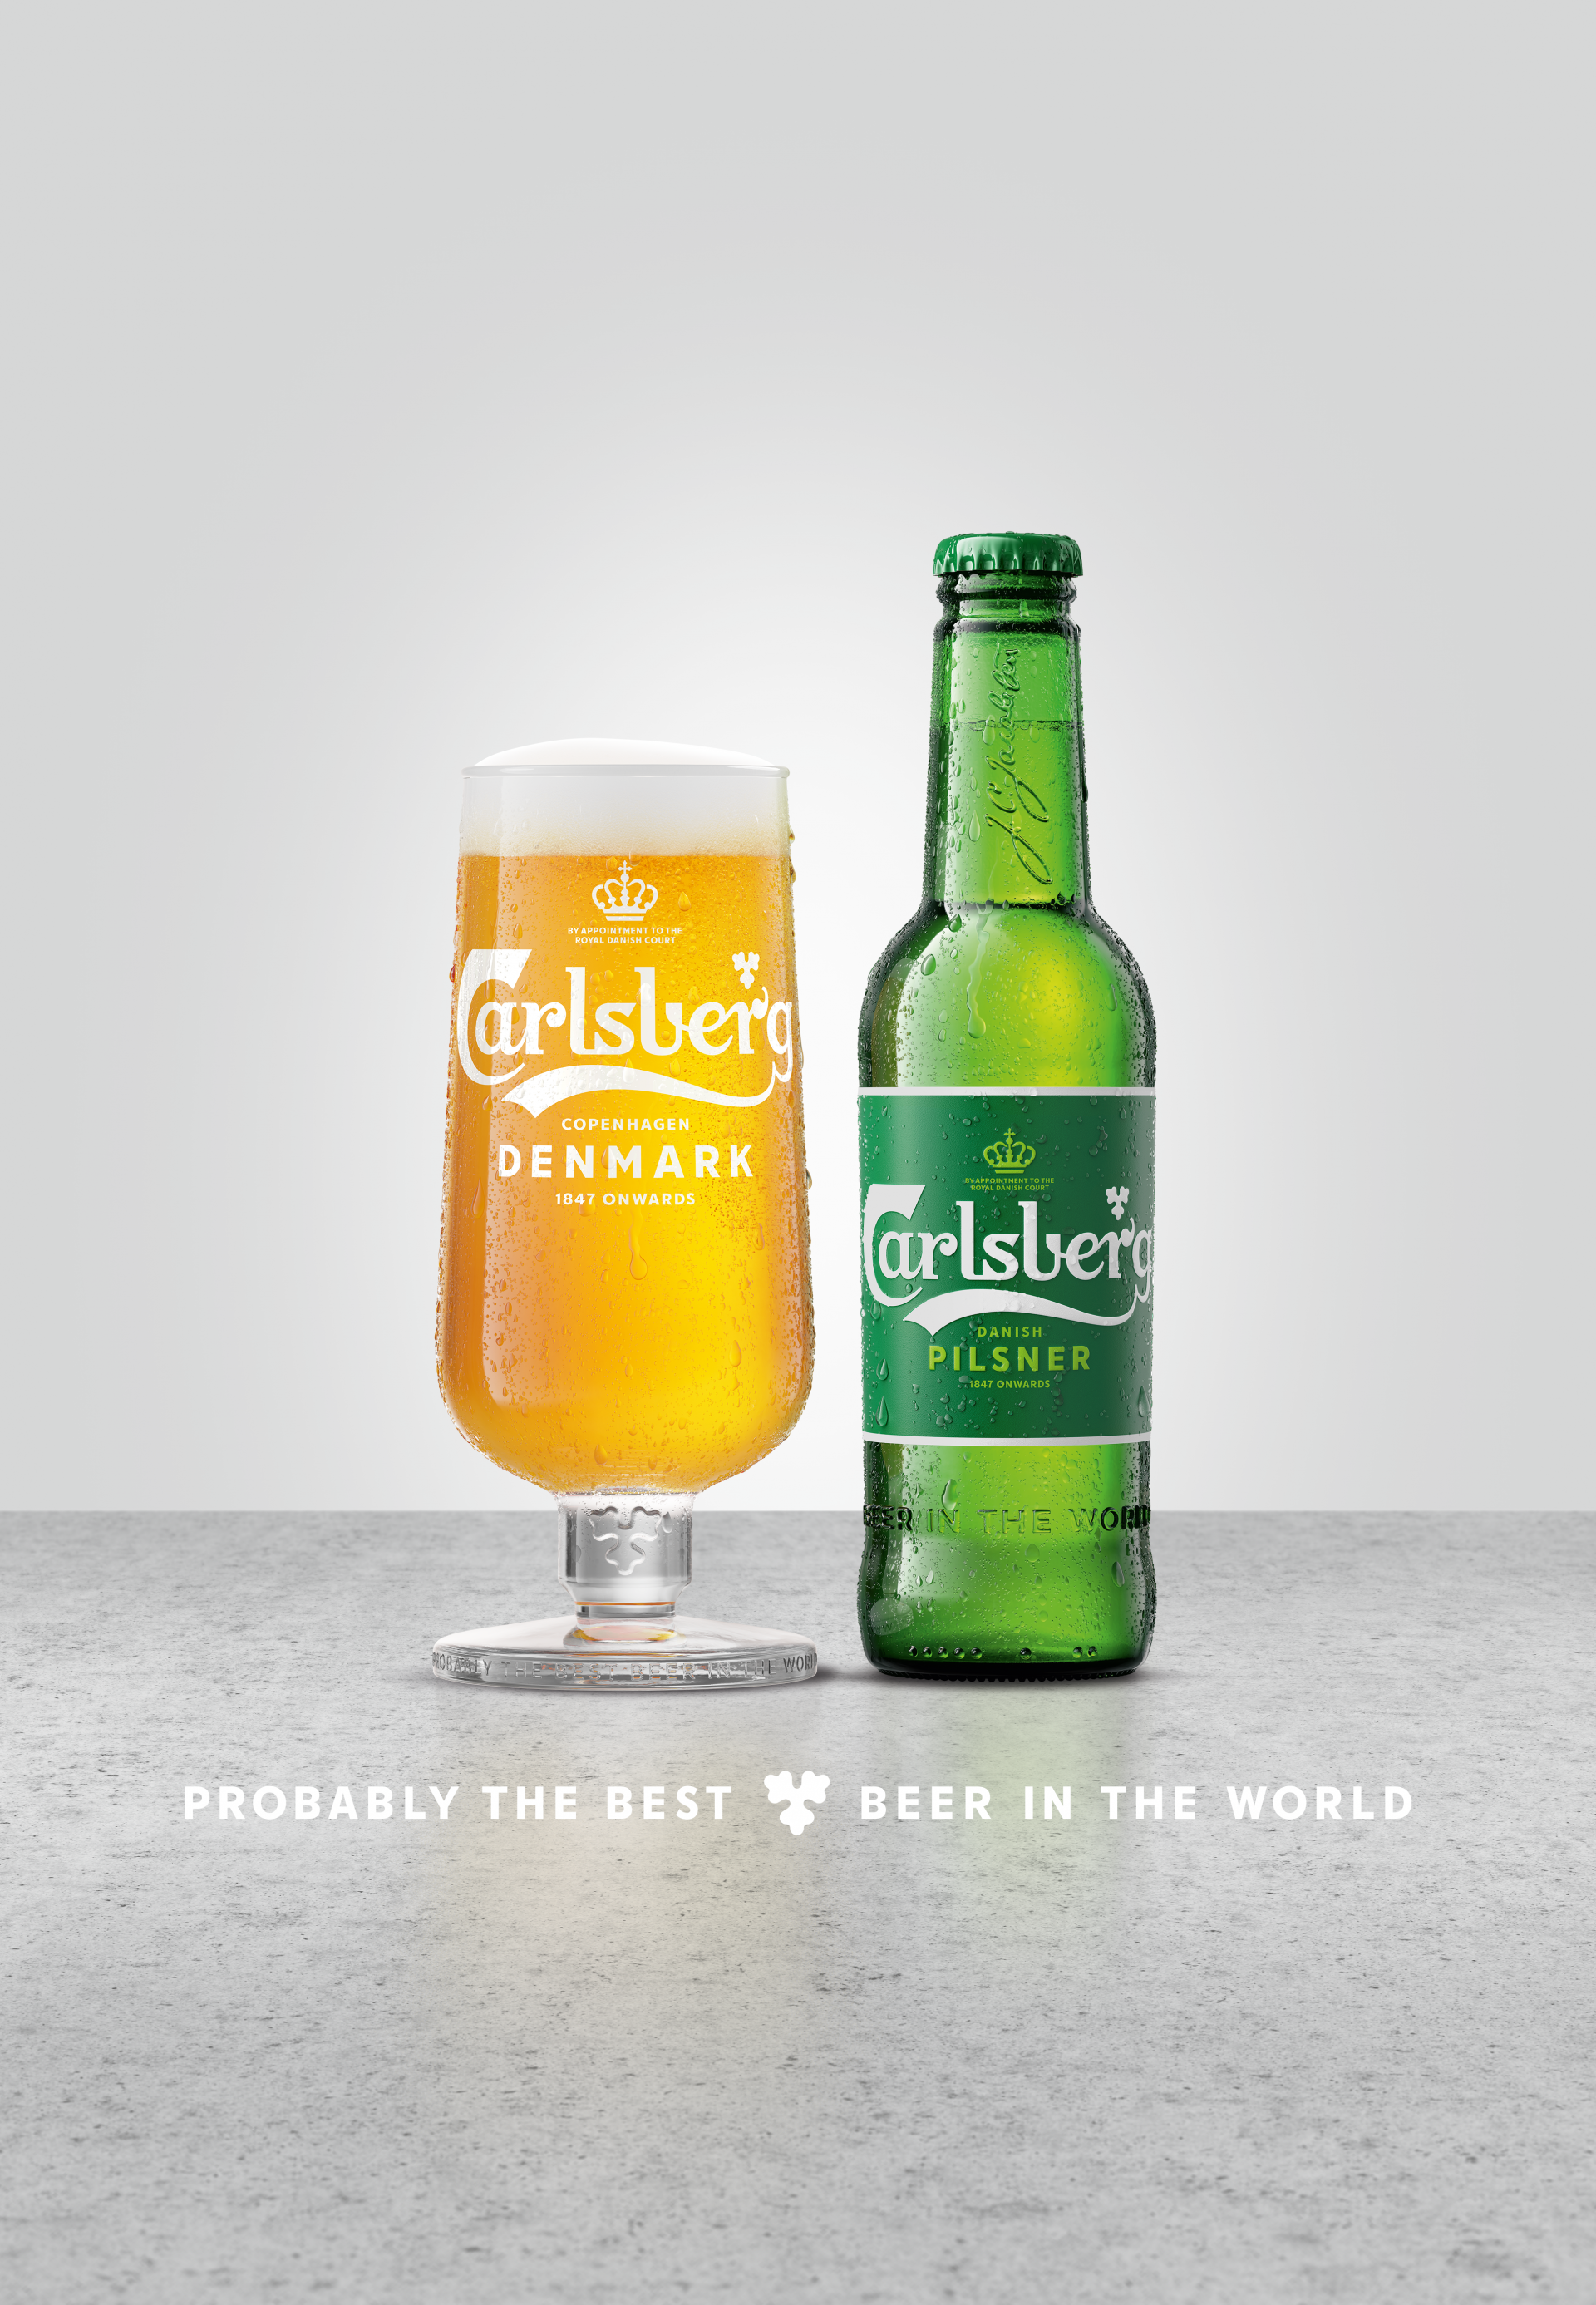 Carlsberg launches premium beer to celebrate 175 years